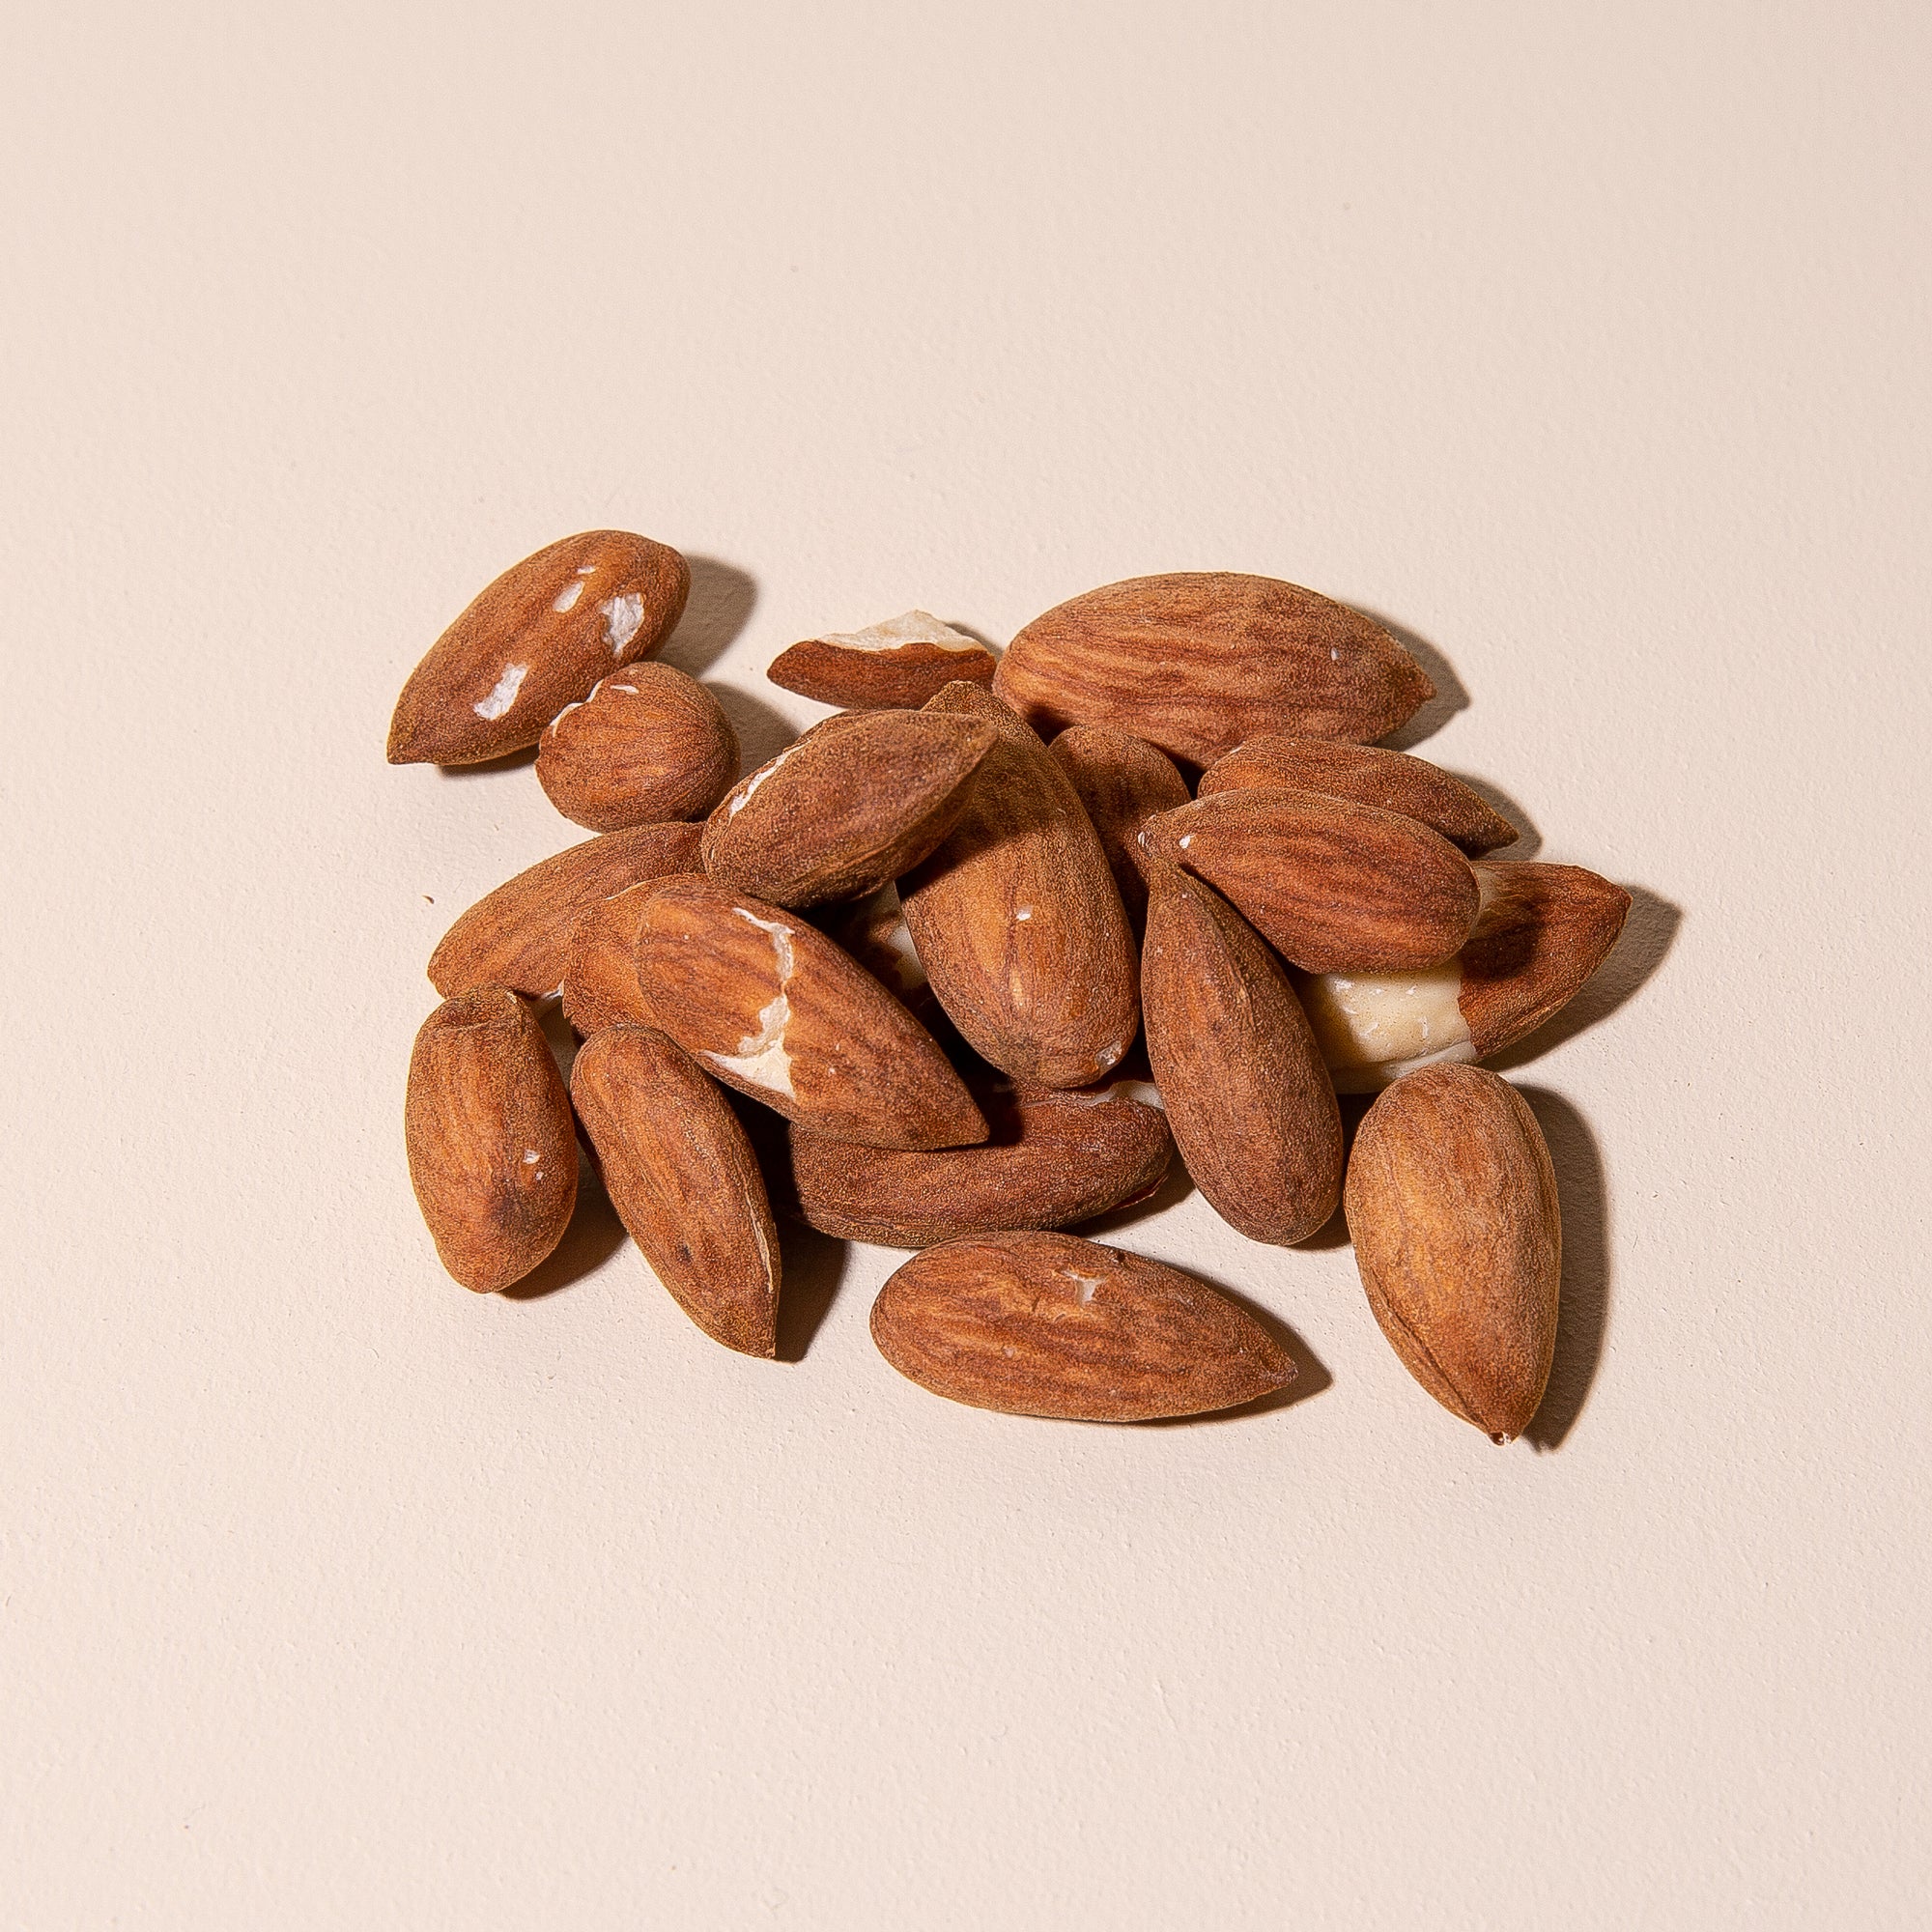 Bulk Almonds (Non-Organic)